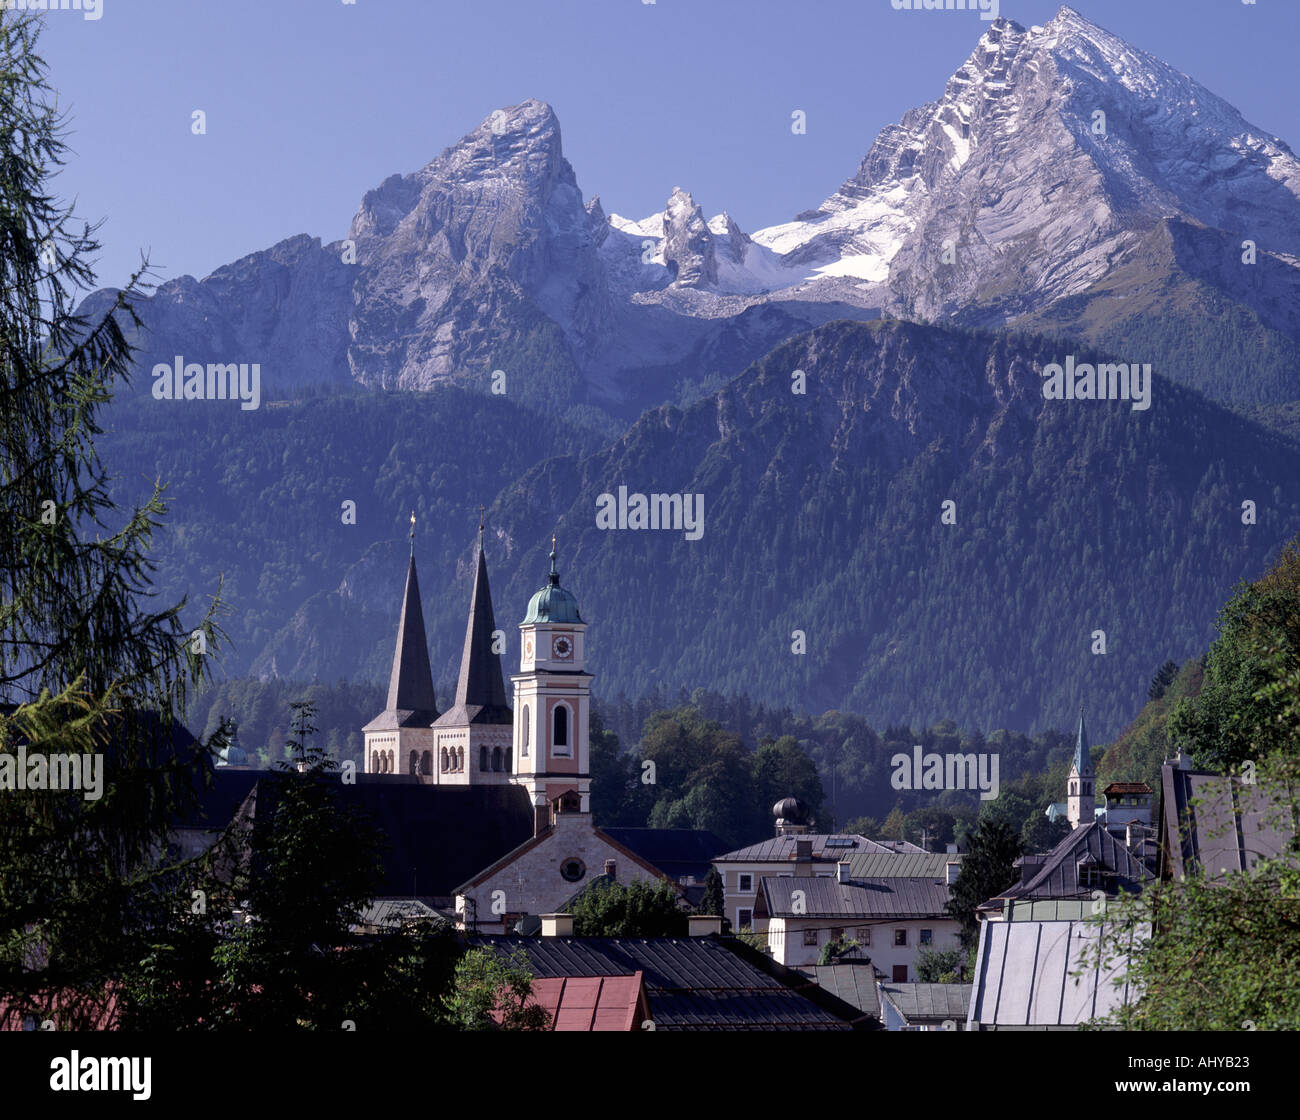 Germania Berchtesgadner Land Berchtesgaden e l'Alp del Watzman Foto Stock